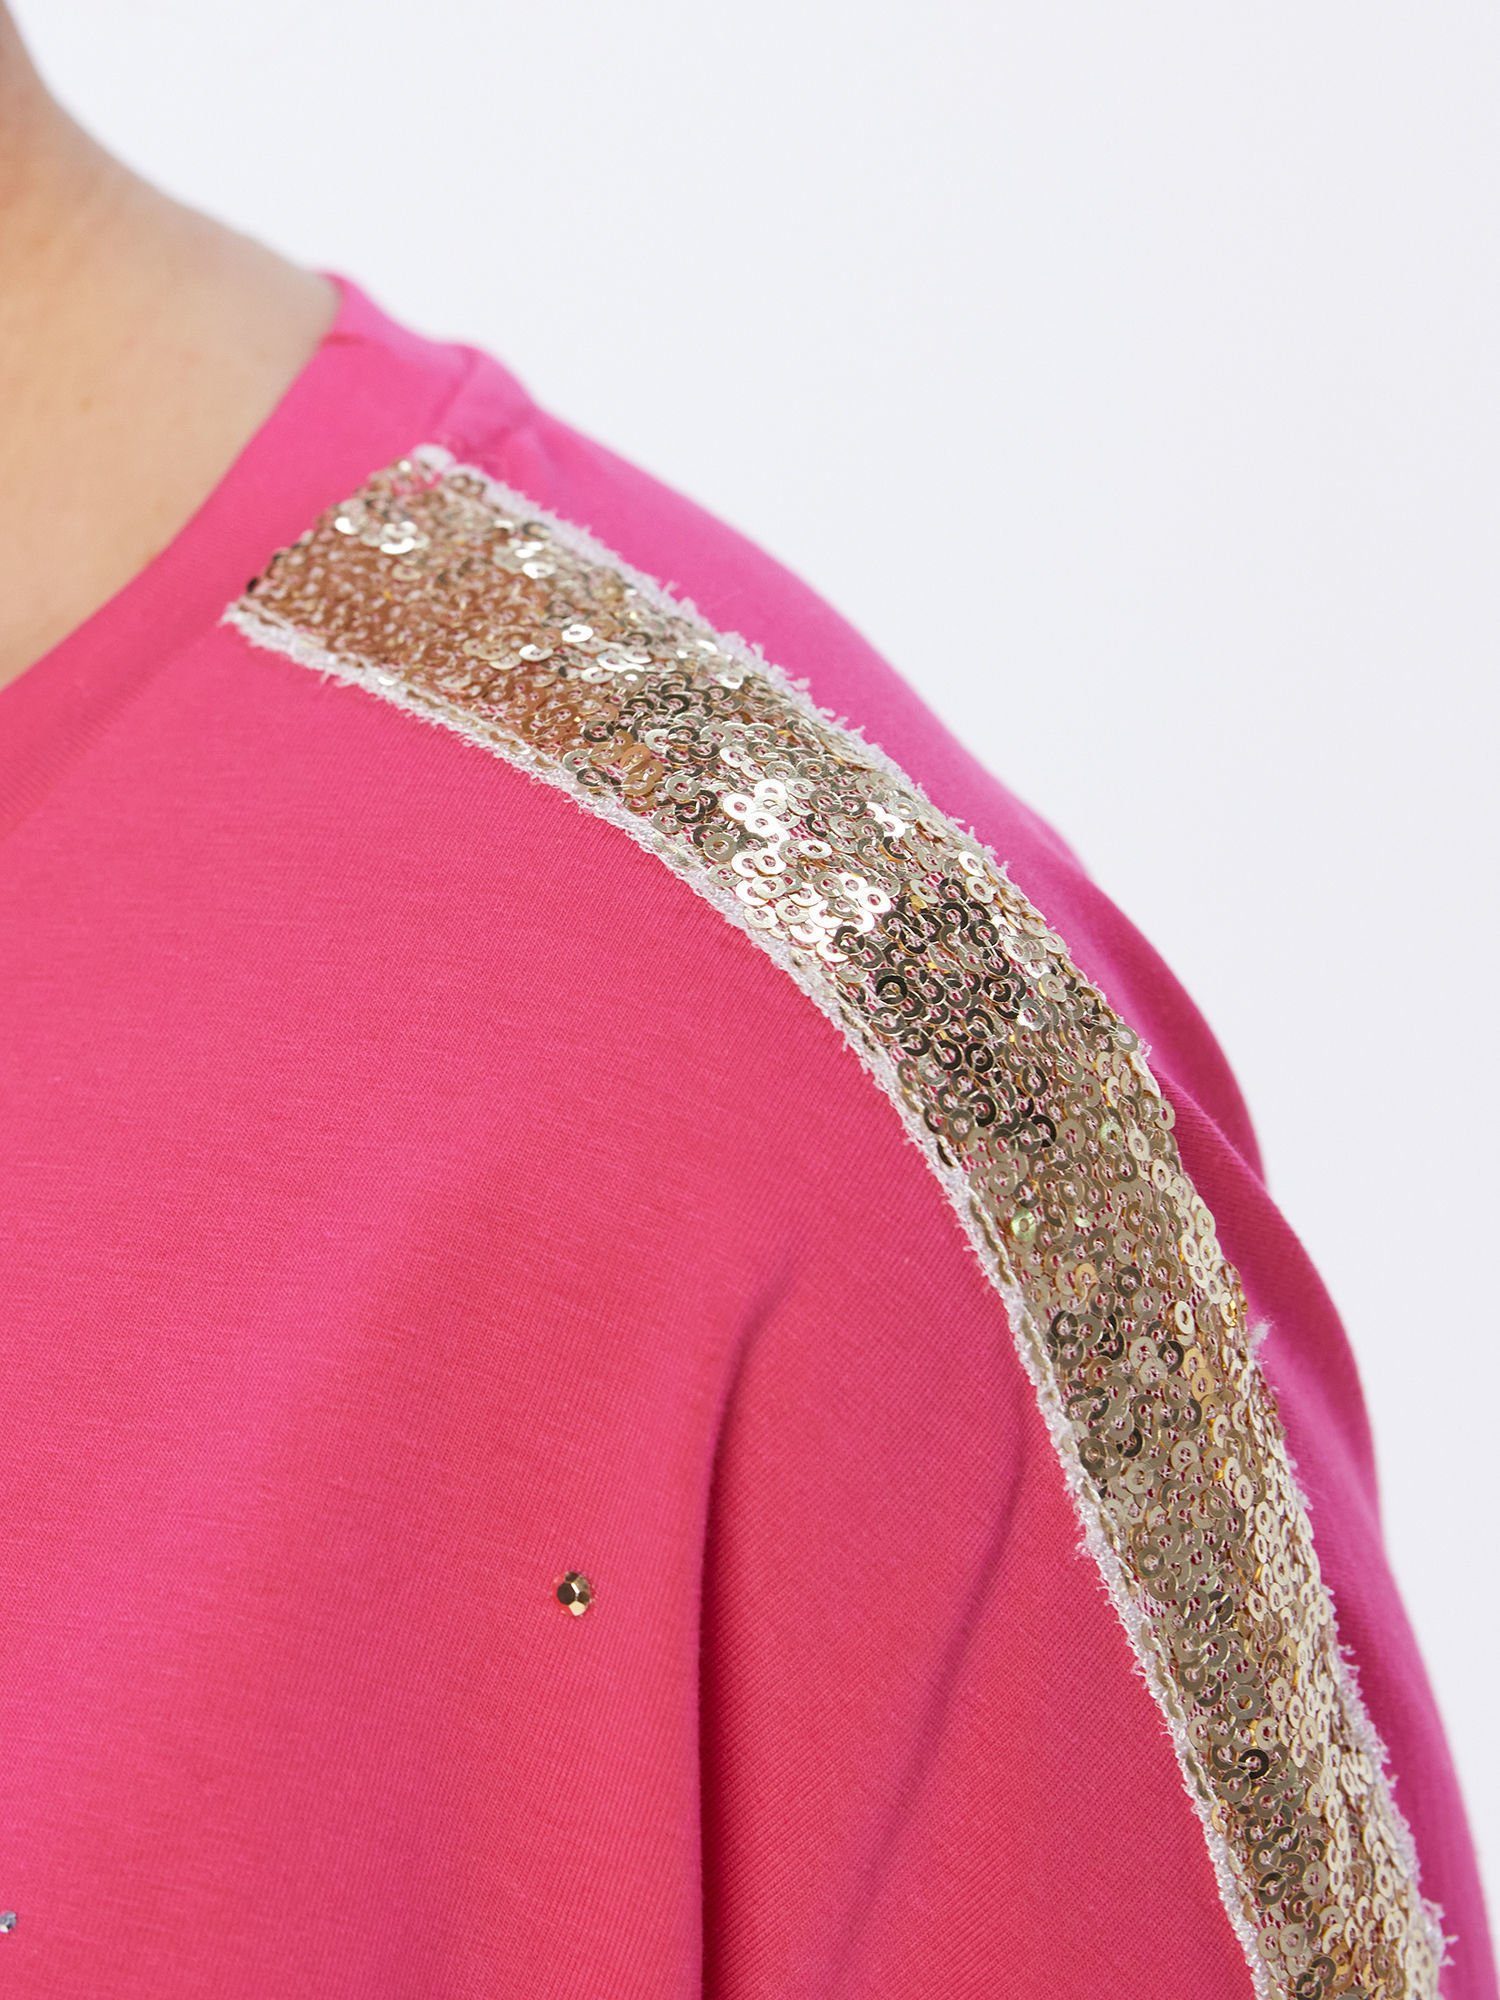 Stern-Motiv mit Christian T-Shirt pink Materne Kurzarmbluse